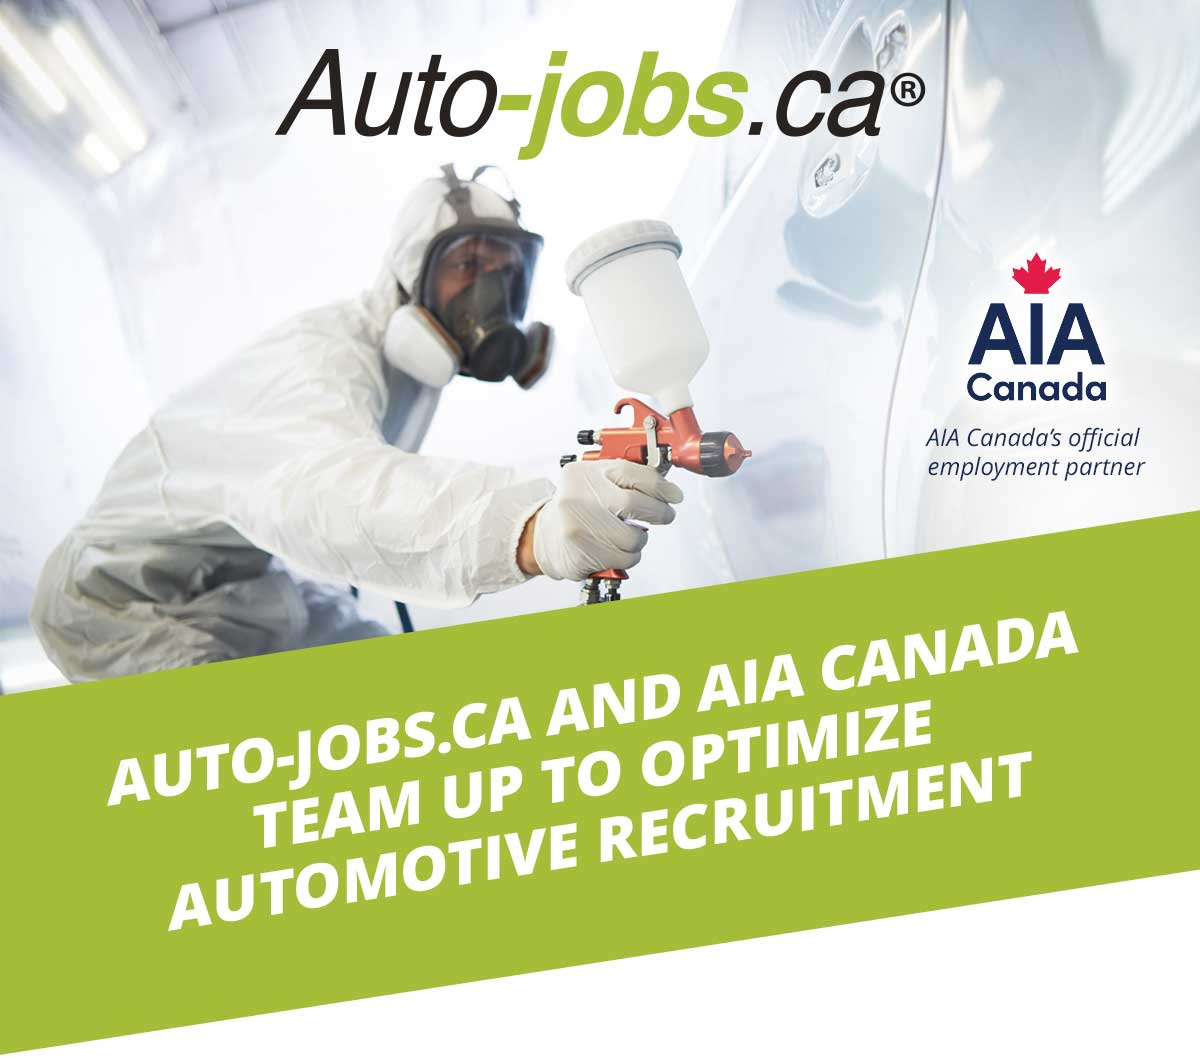 Auto-jobs.ca and AIA Canada Team Up to Optimize Automotive Recruitment